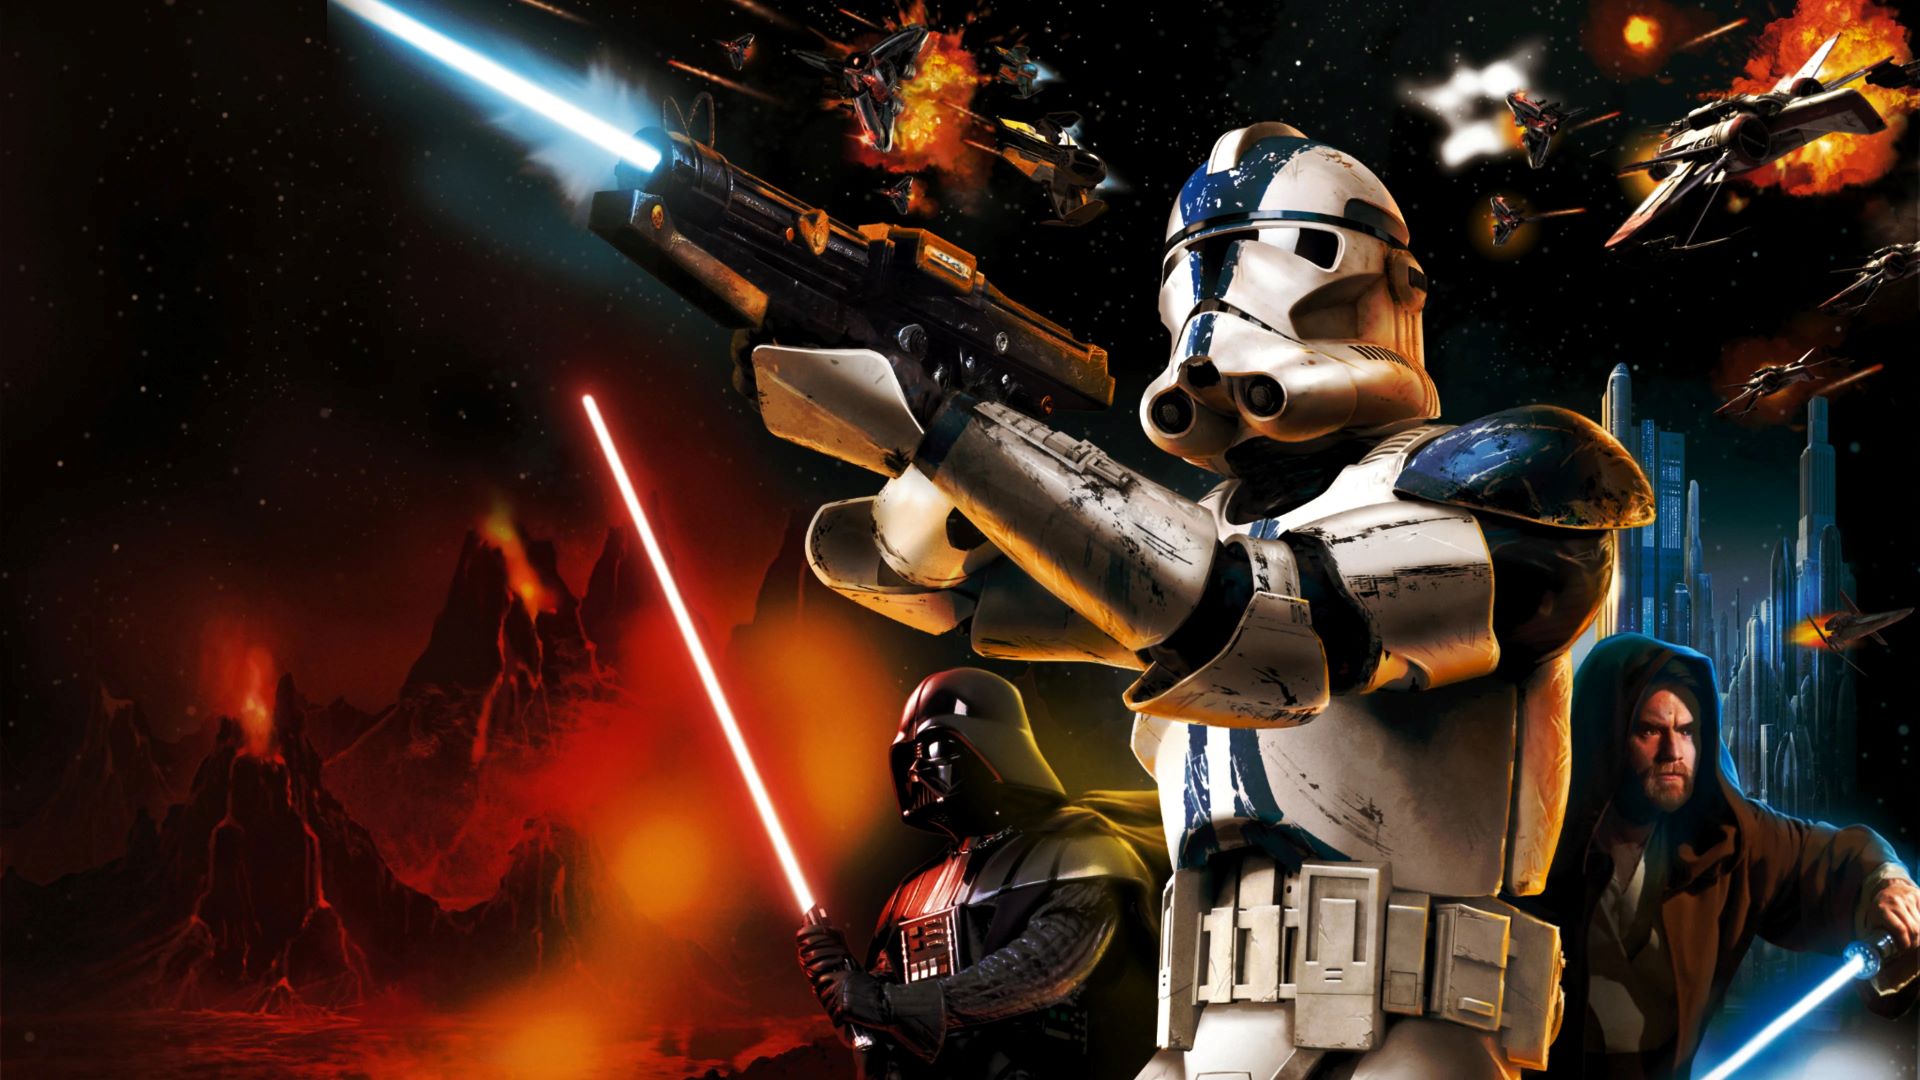 احتمال عرضه‌ی بازی Star Wars Battlefront 2 روی سرویس پلی استیشن پلاس